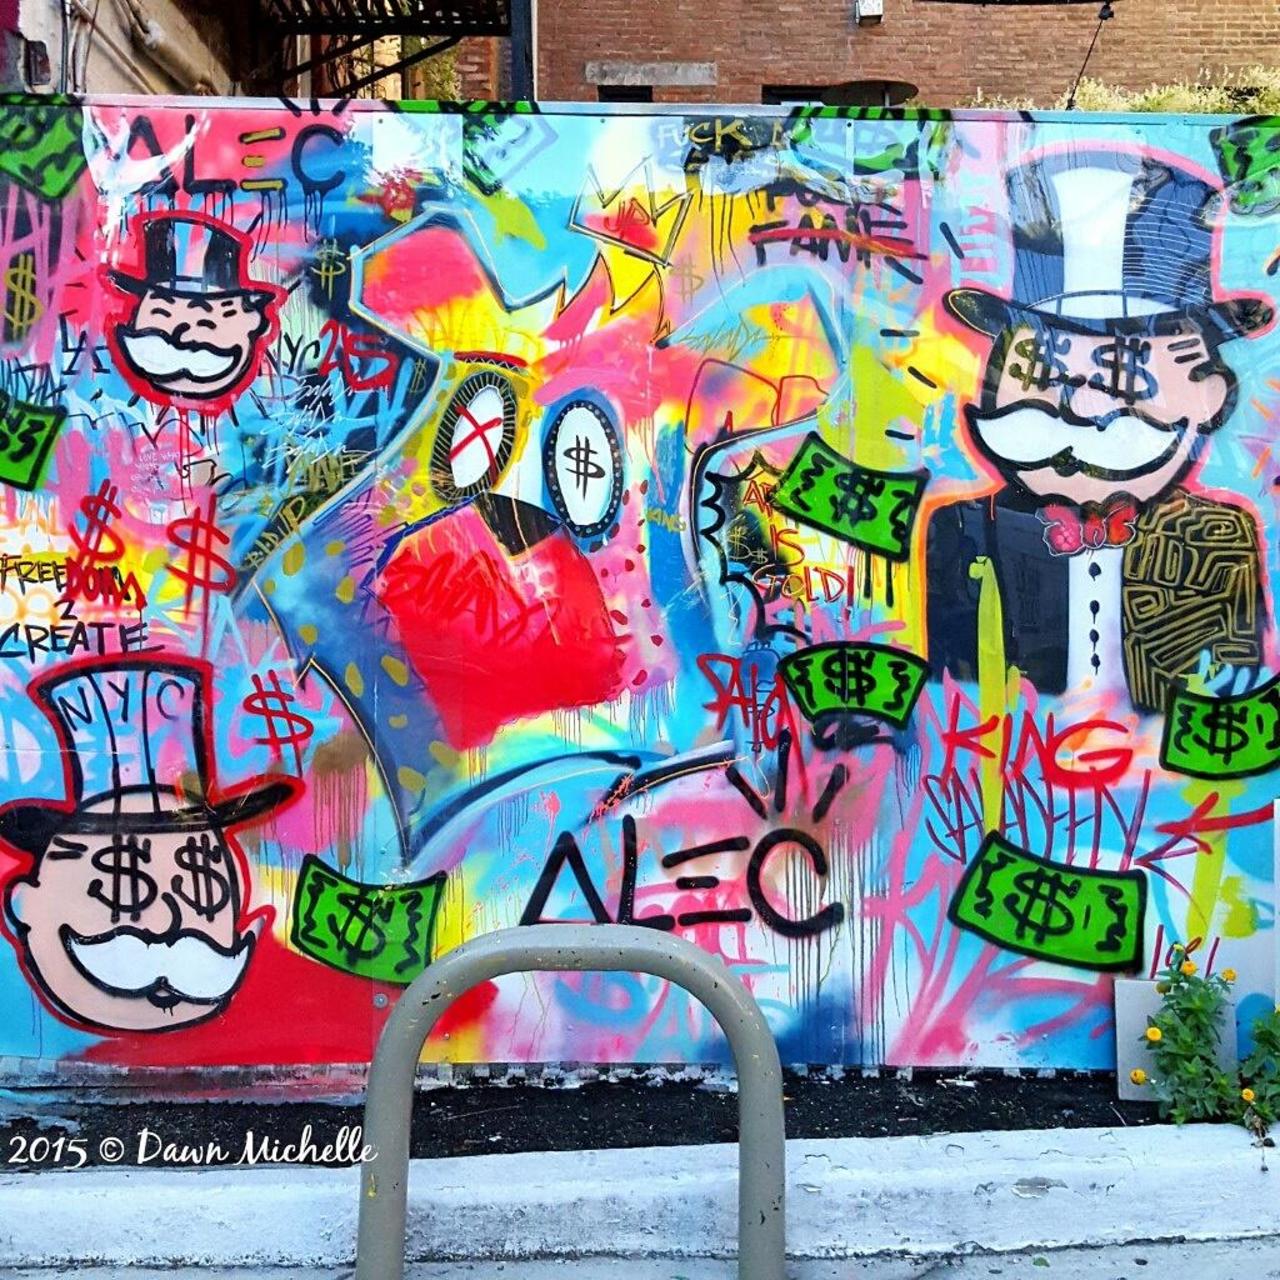 RT @cullin738: By Alec Monopoly #nyc #graffiti #streetart #art #graff @globalgraff @circumjacent @MadeInManchestr @GraffitiFeed https://t.co/aVAr5v61l4